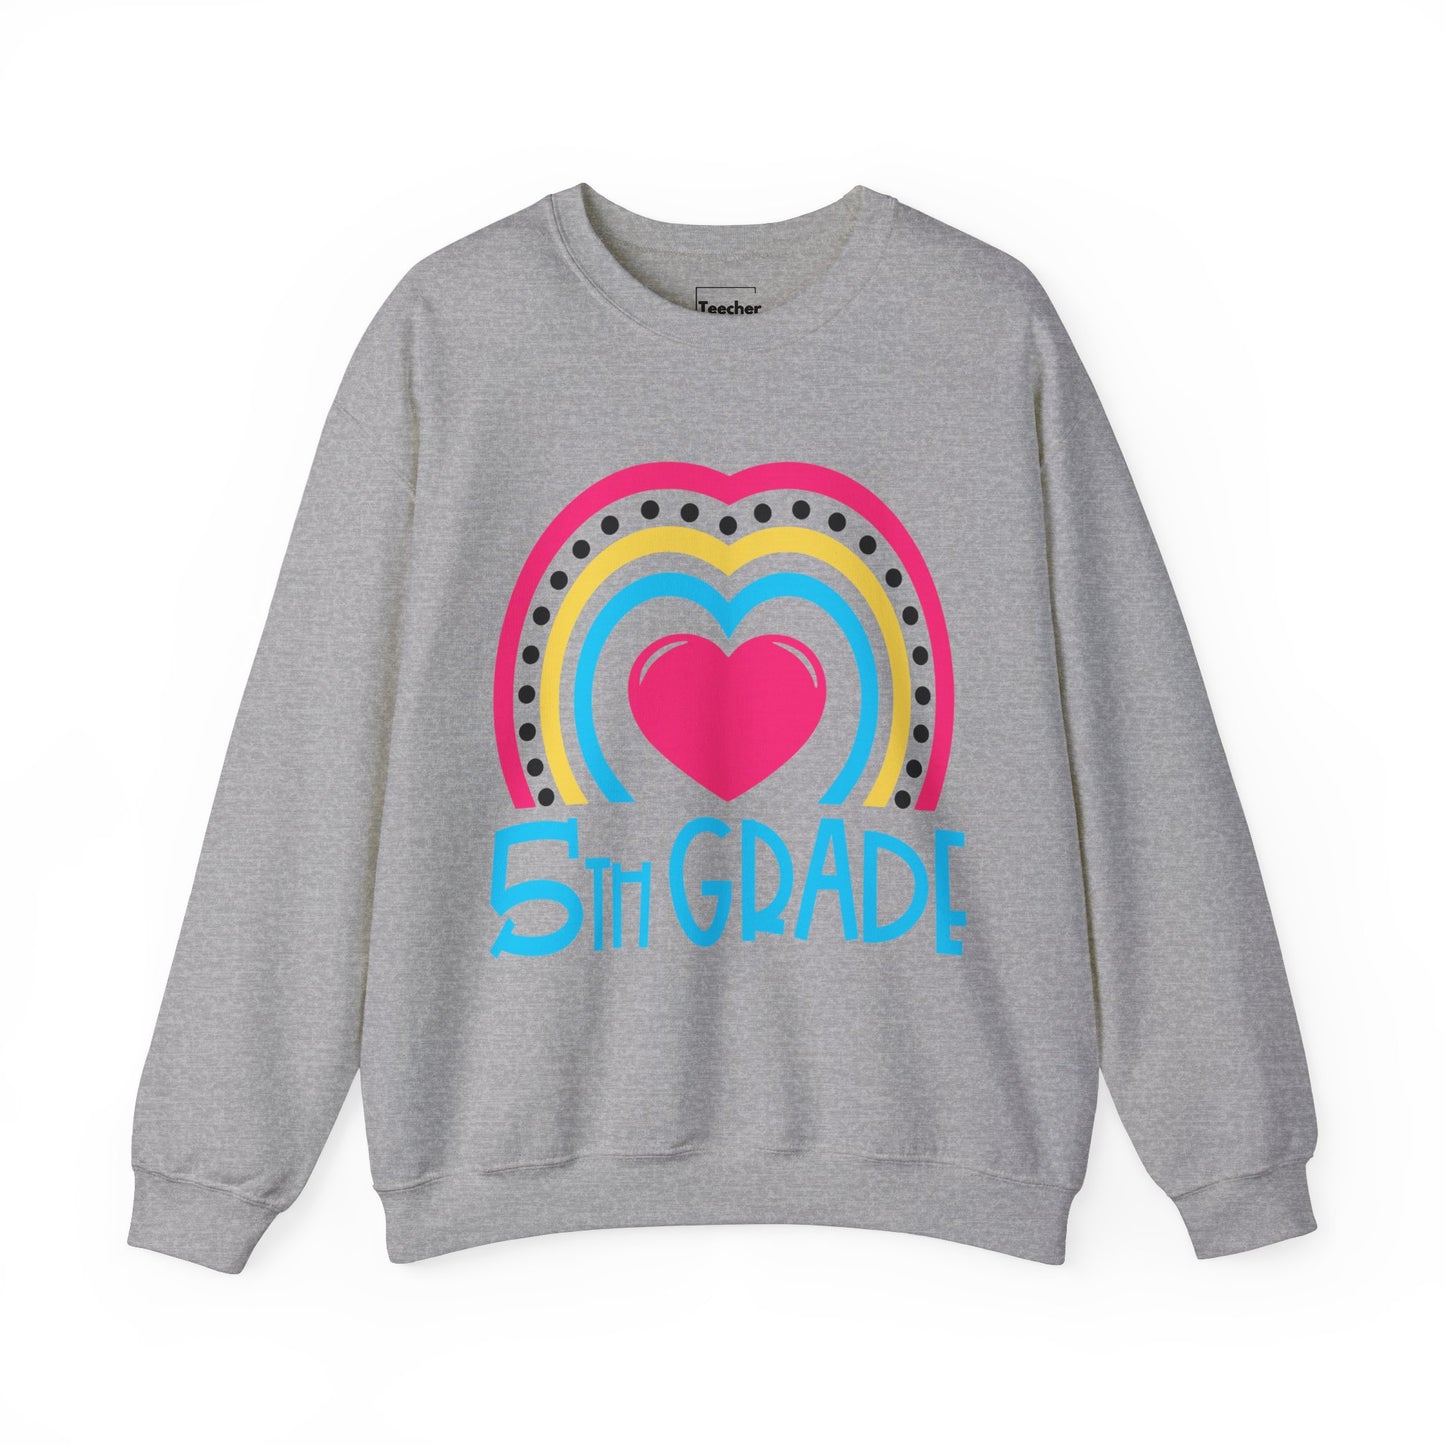 Heart 5th Grade Sweatshirt